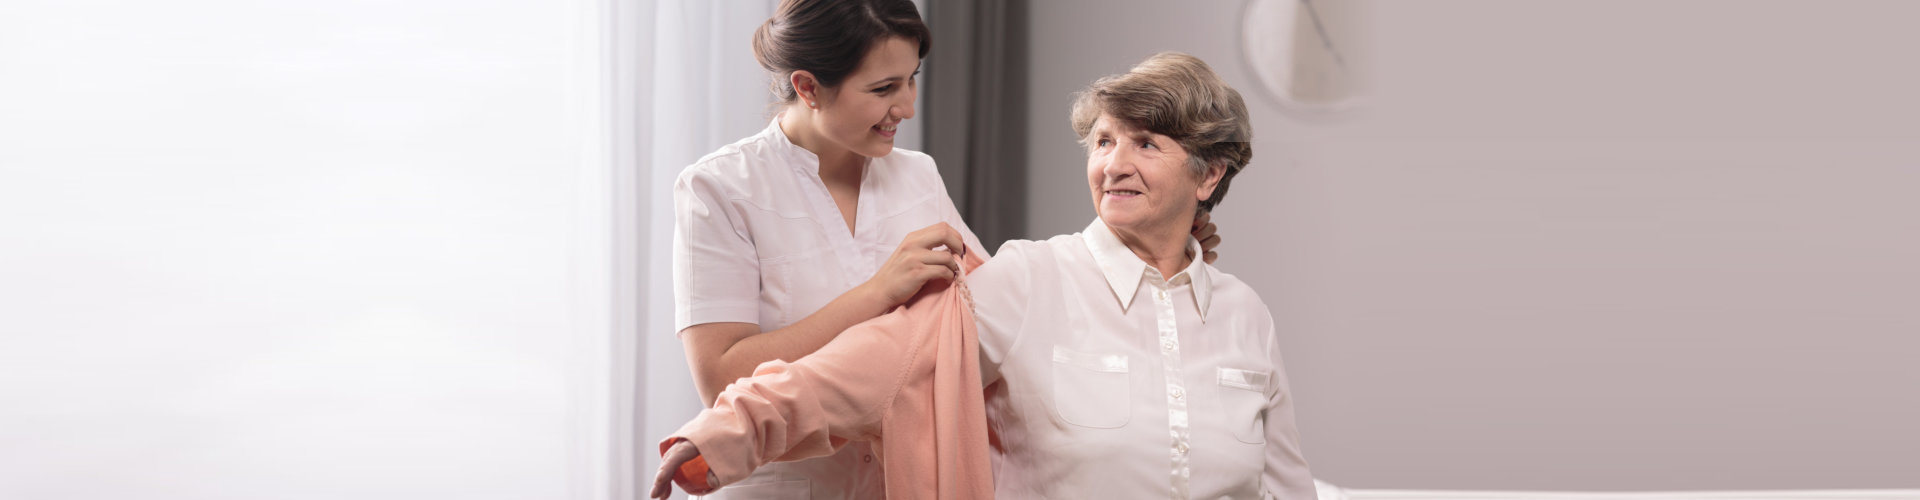 caregiver dressing her senior patient